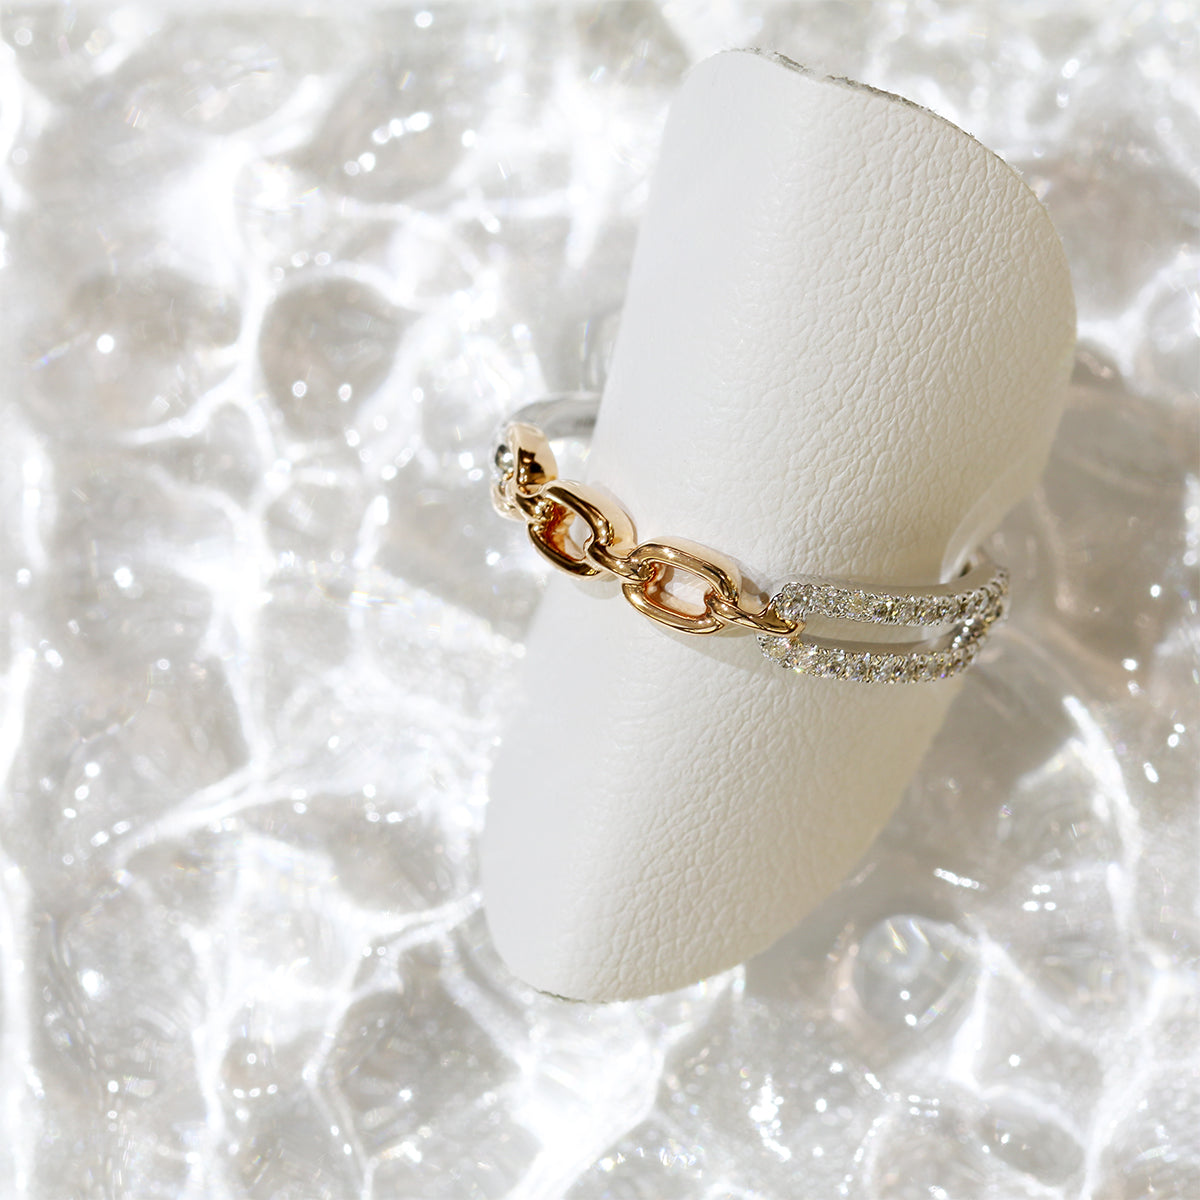 玫瑰金白金鑽石鏈條戒指 Rose Gold and White Gold Chain Diamond Ring